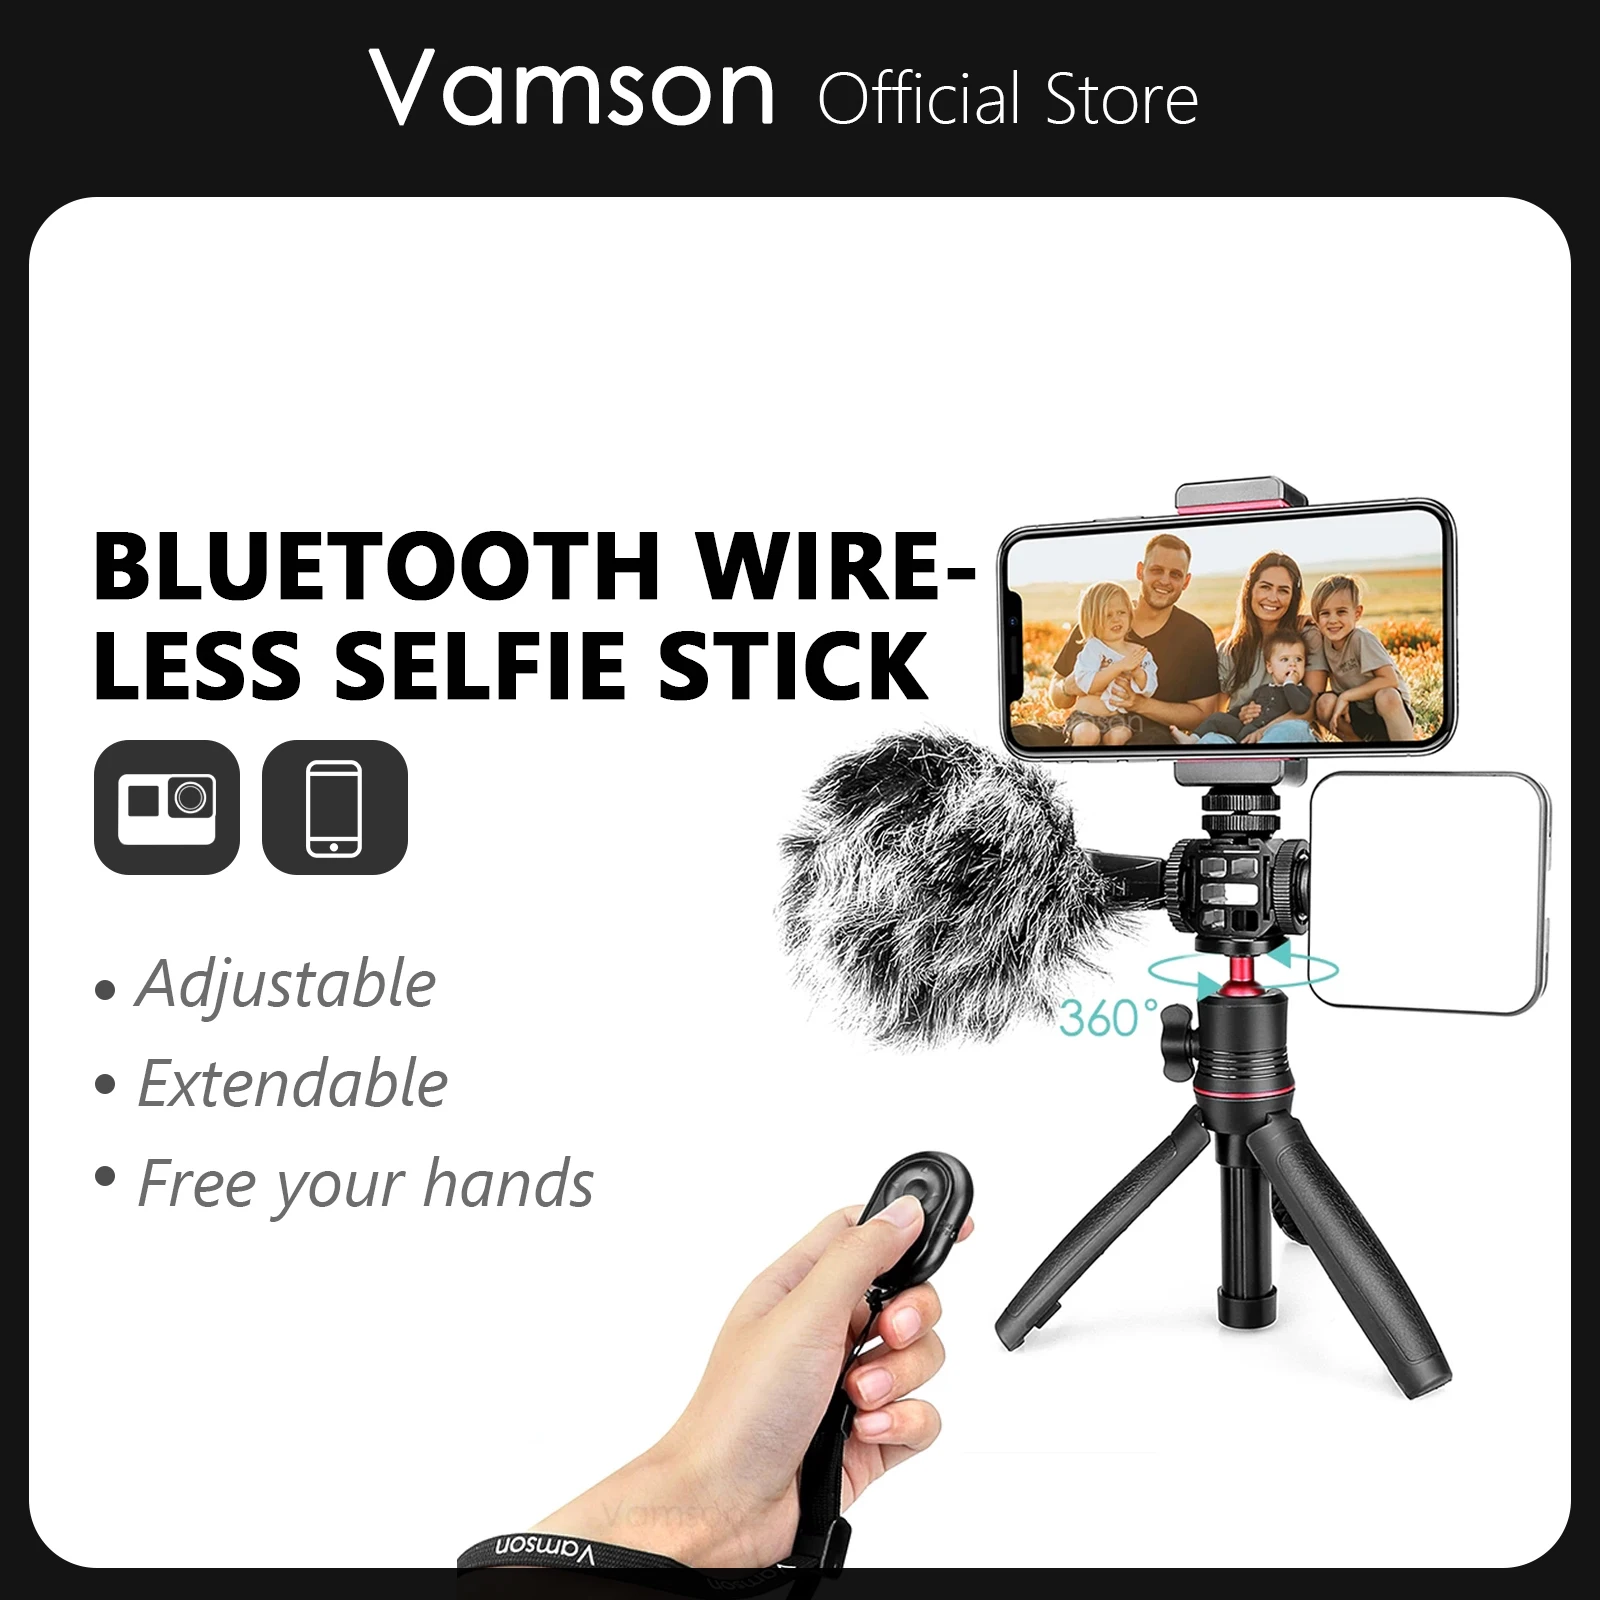 Vamson Bluetooth-Selfie Stick Mini Statiiv Monopod koos Fill Light Remote Shutter iPhone Samsung Android Live Vlog